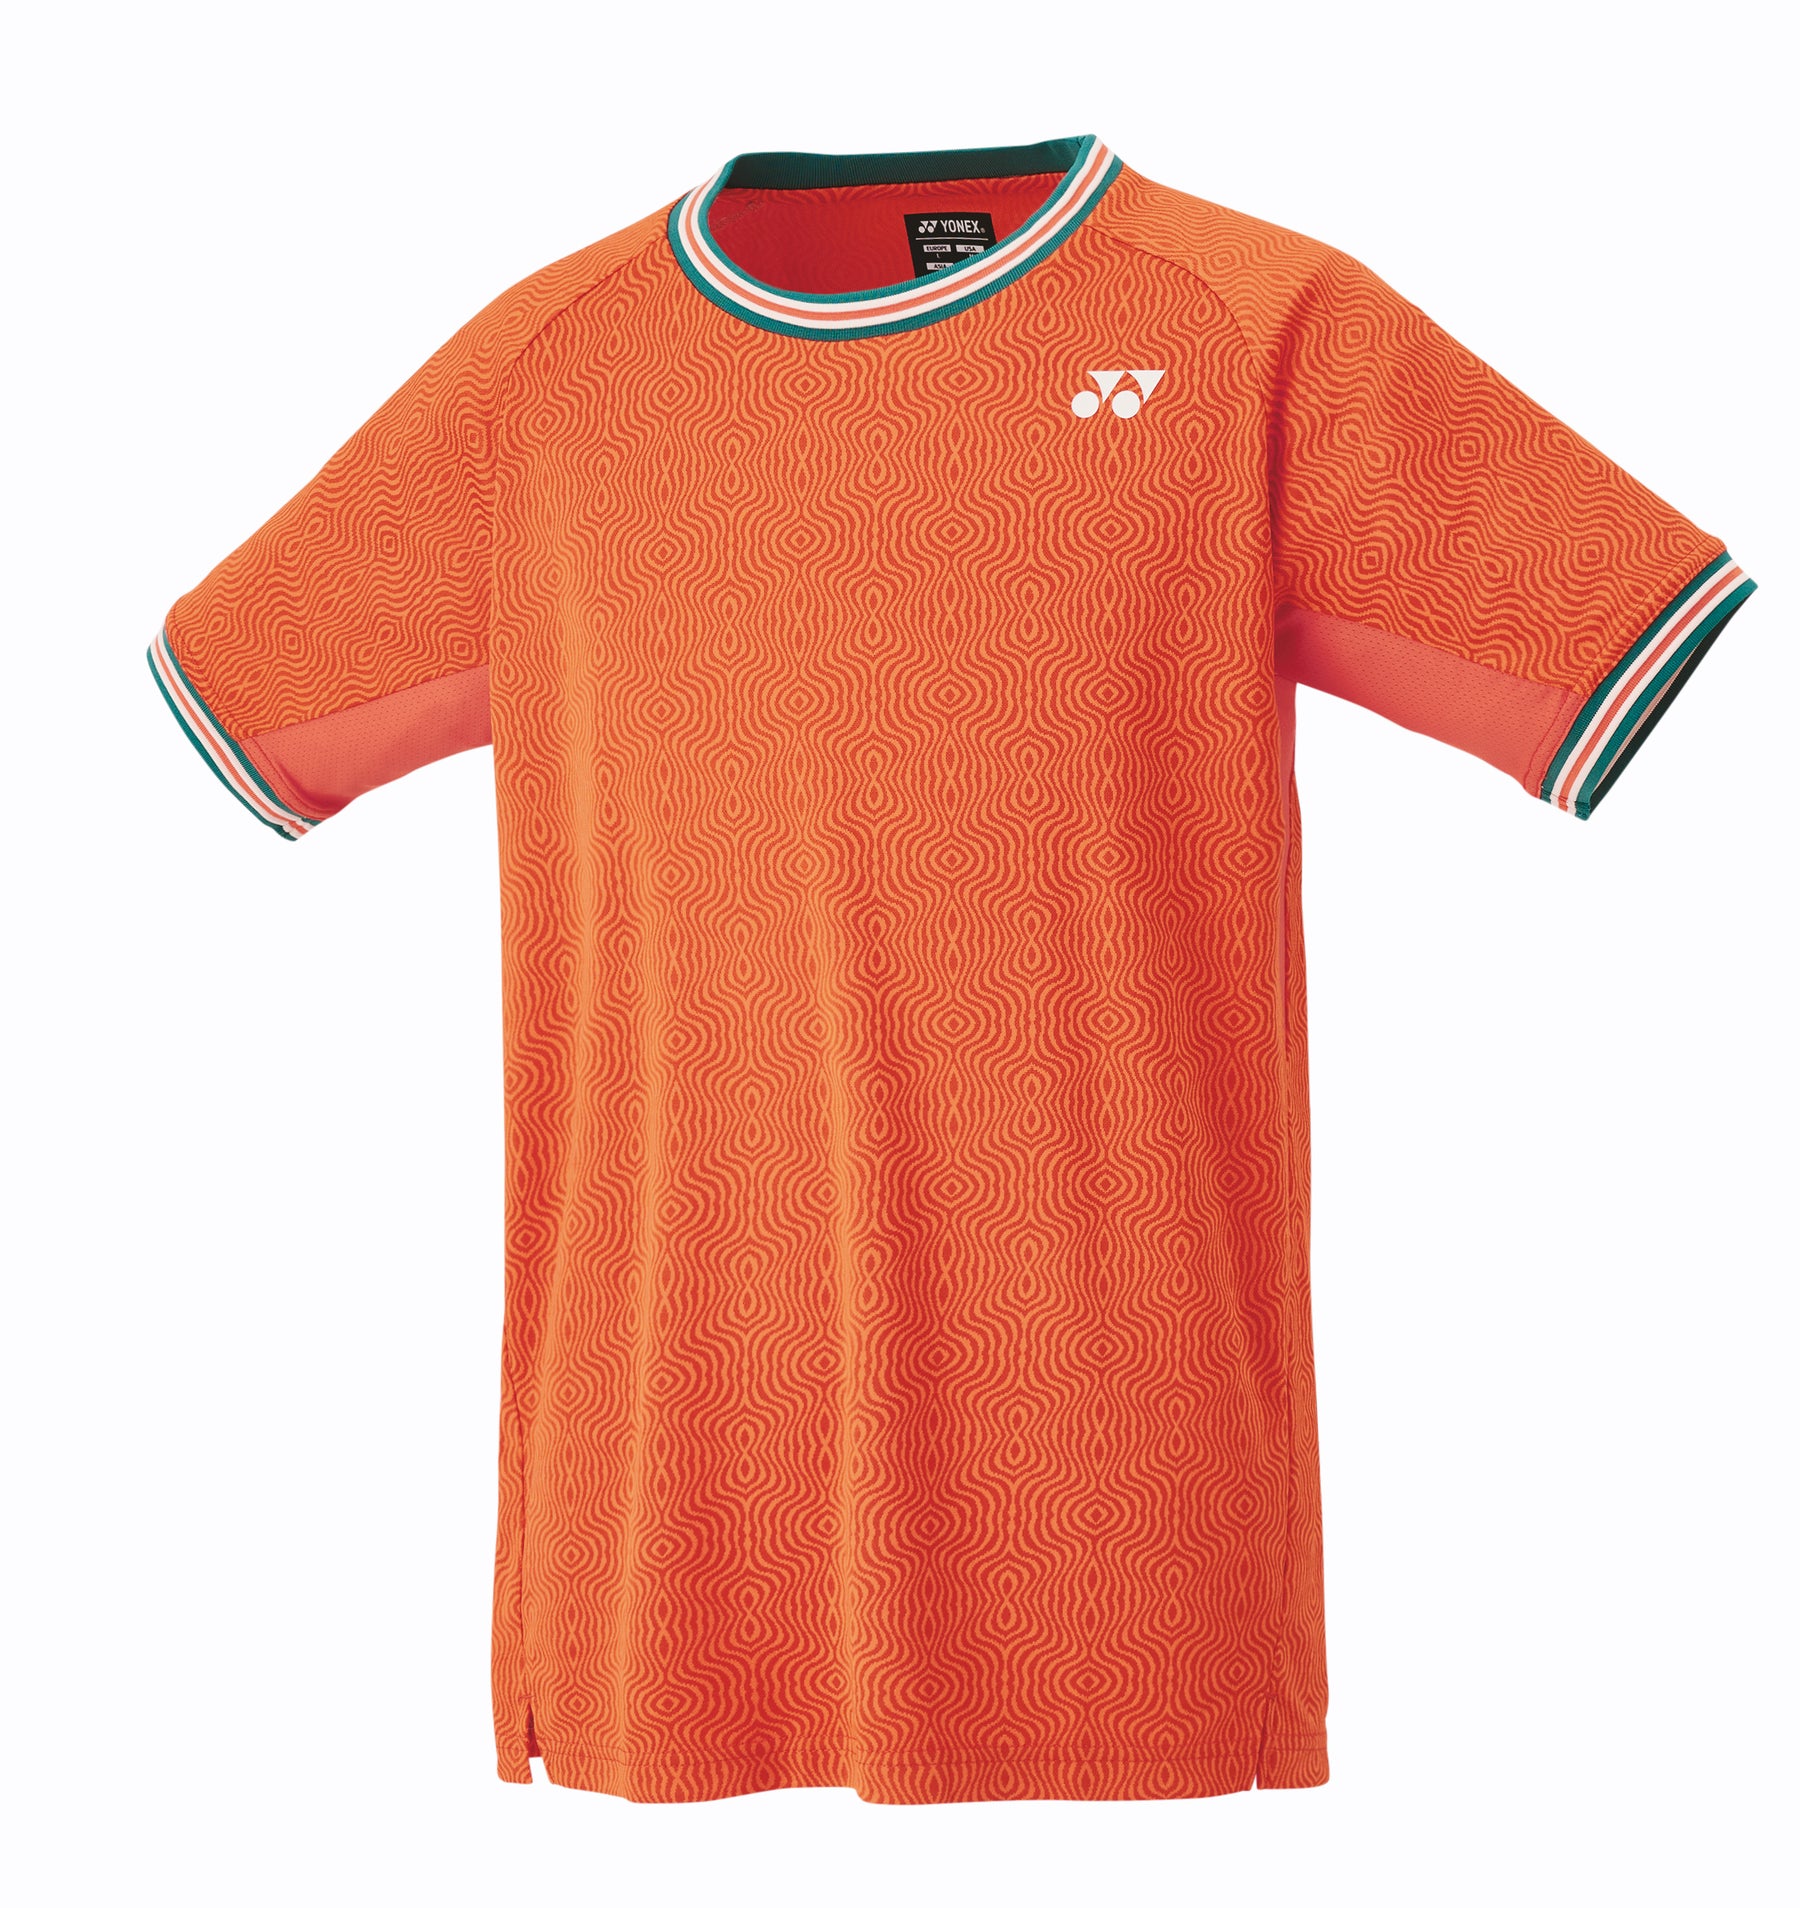 Yonex 10560 Crew Neck Shirt Mens (Bright Orange)